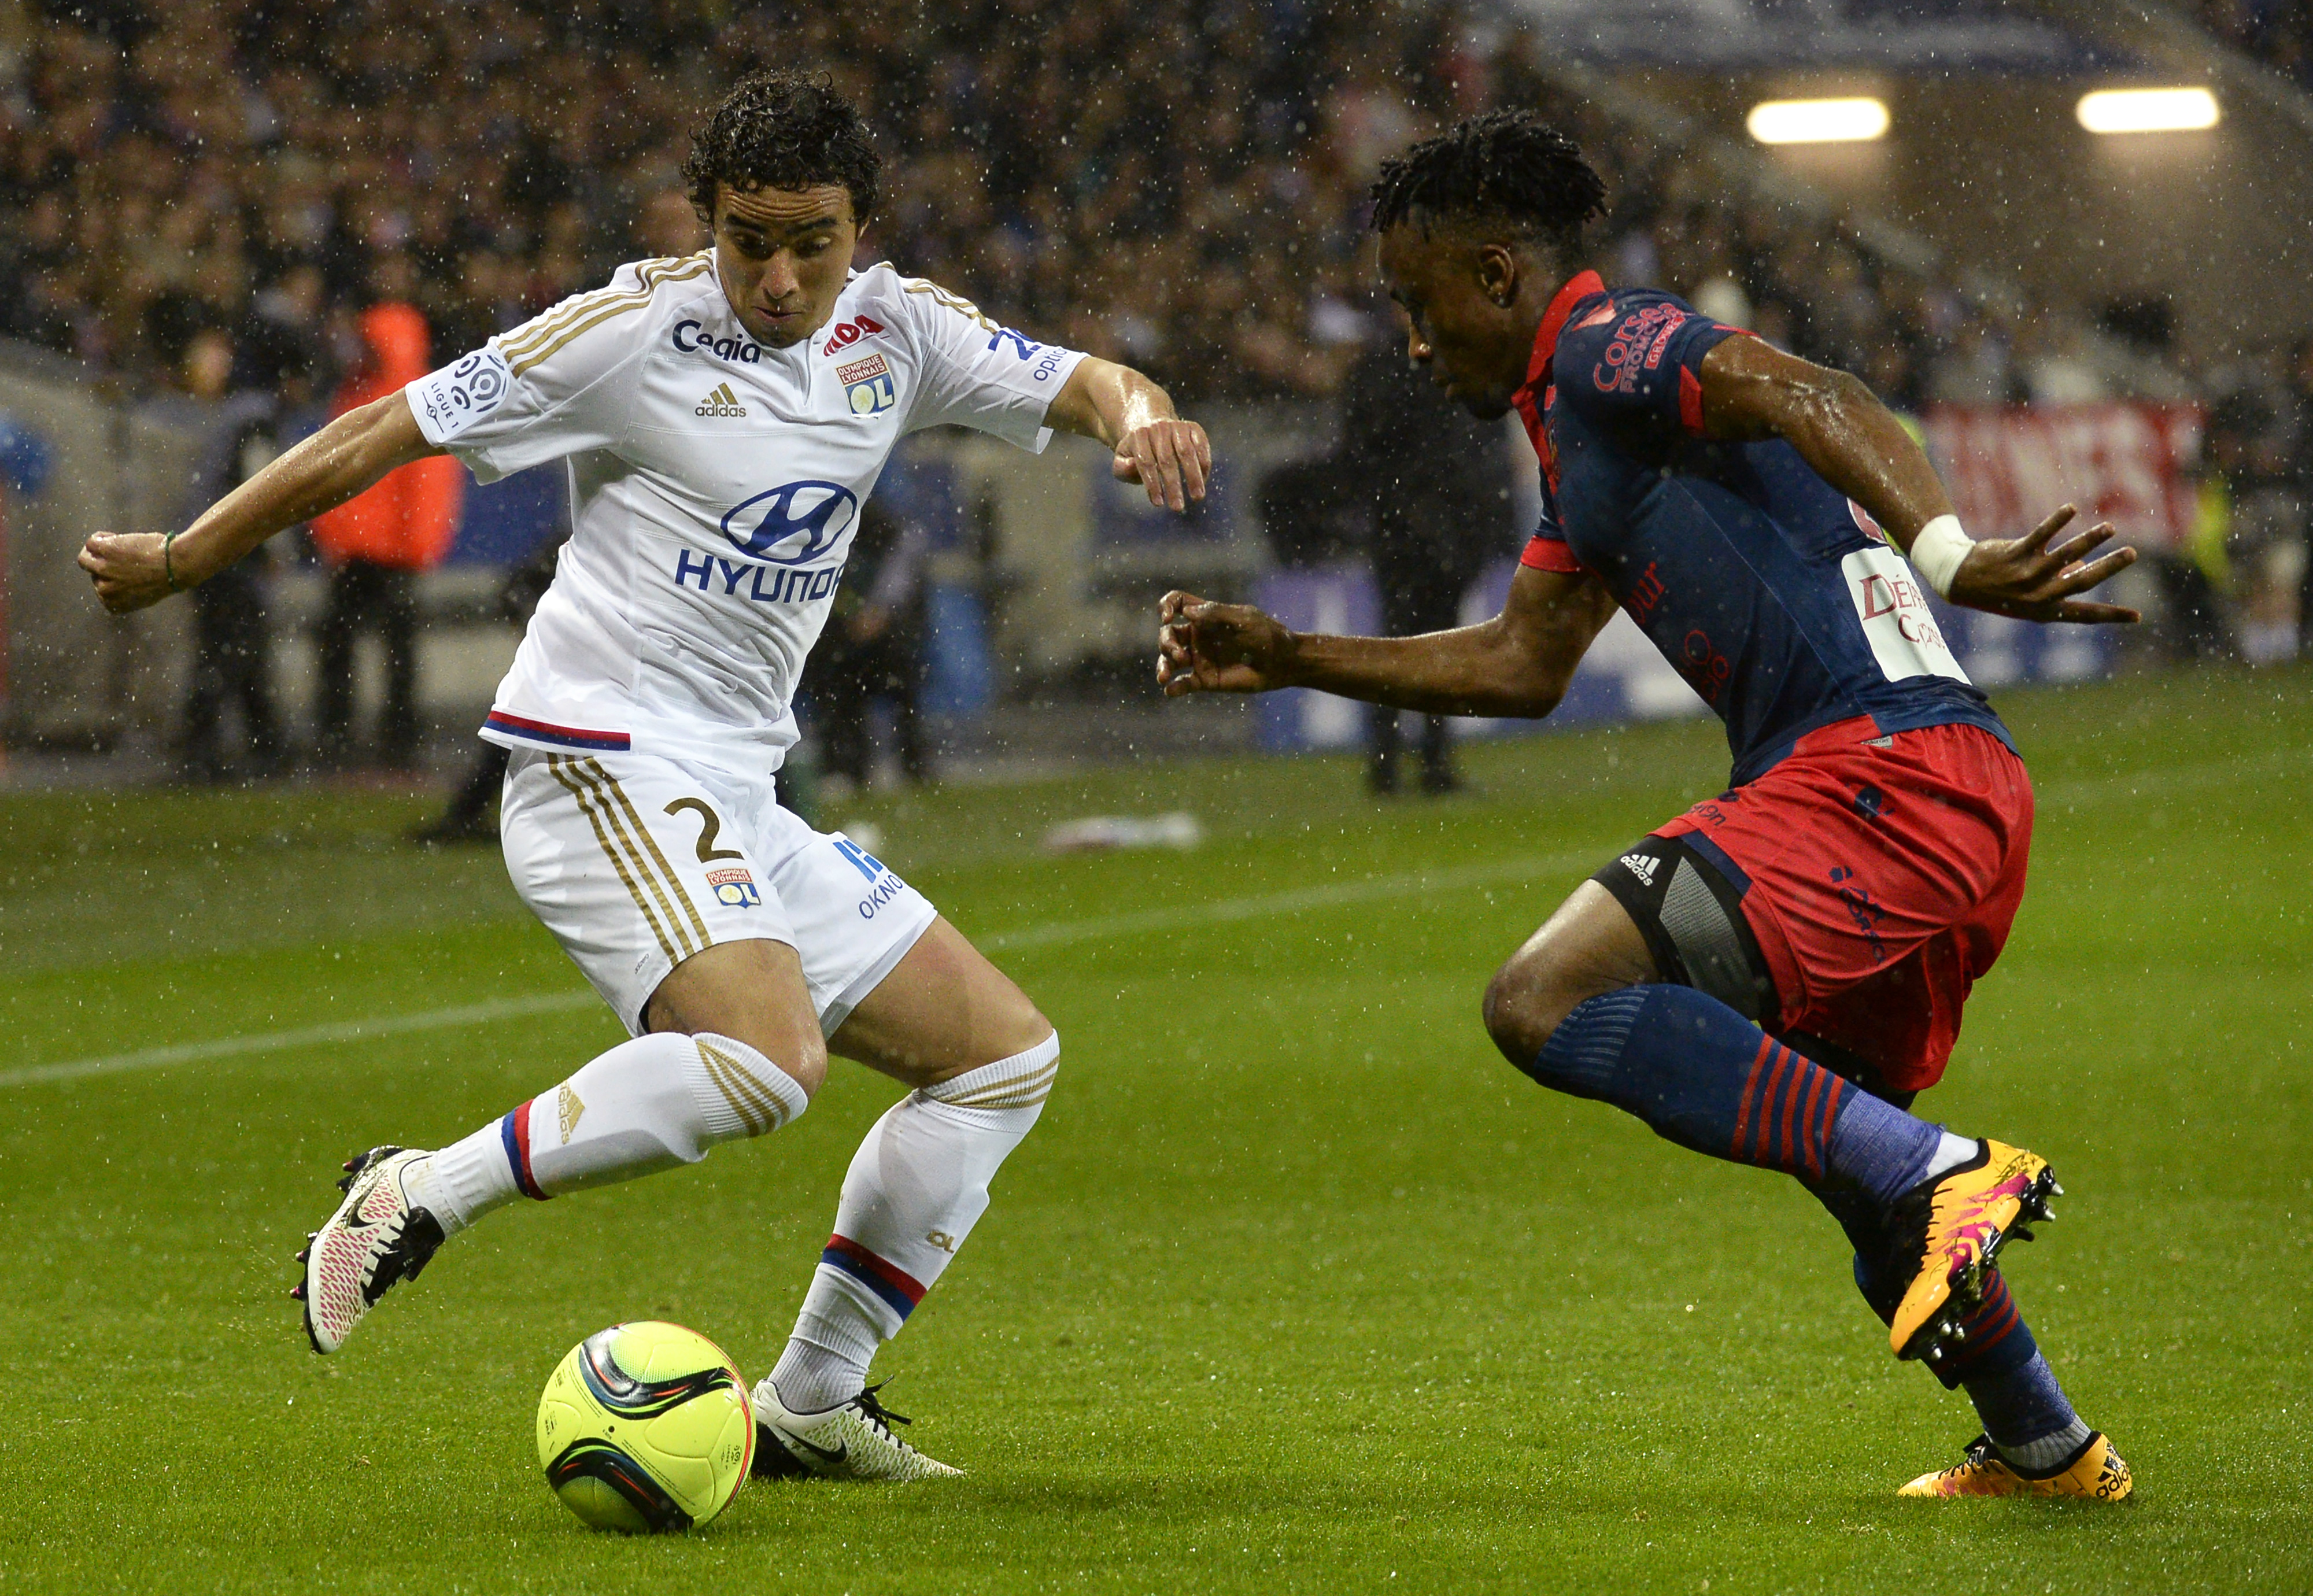 Ligue 1: Lyon 2 – 1 Gazélec Ajaccio